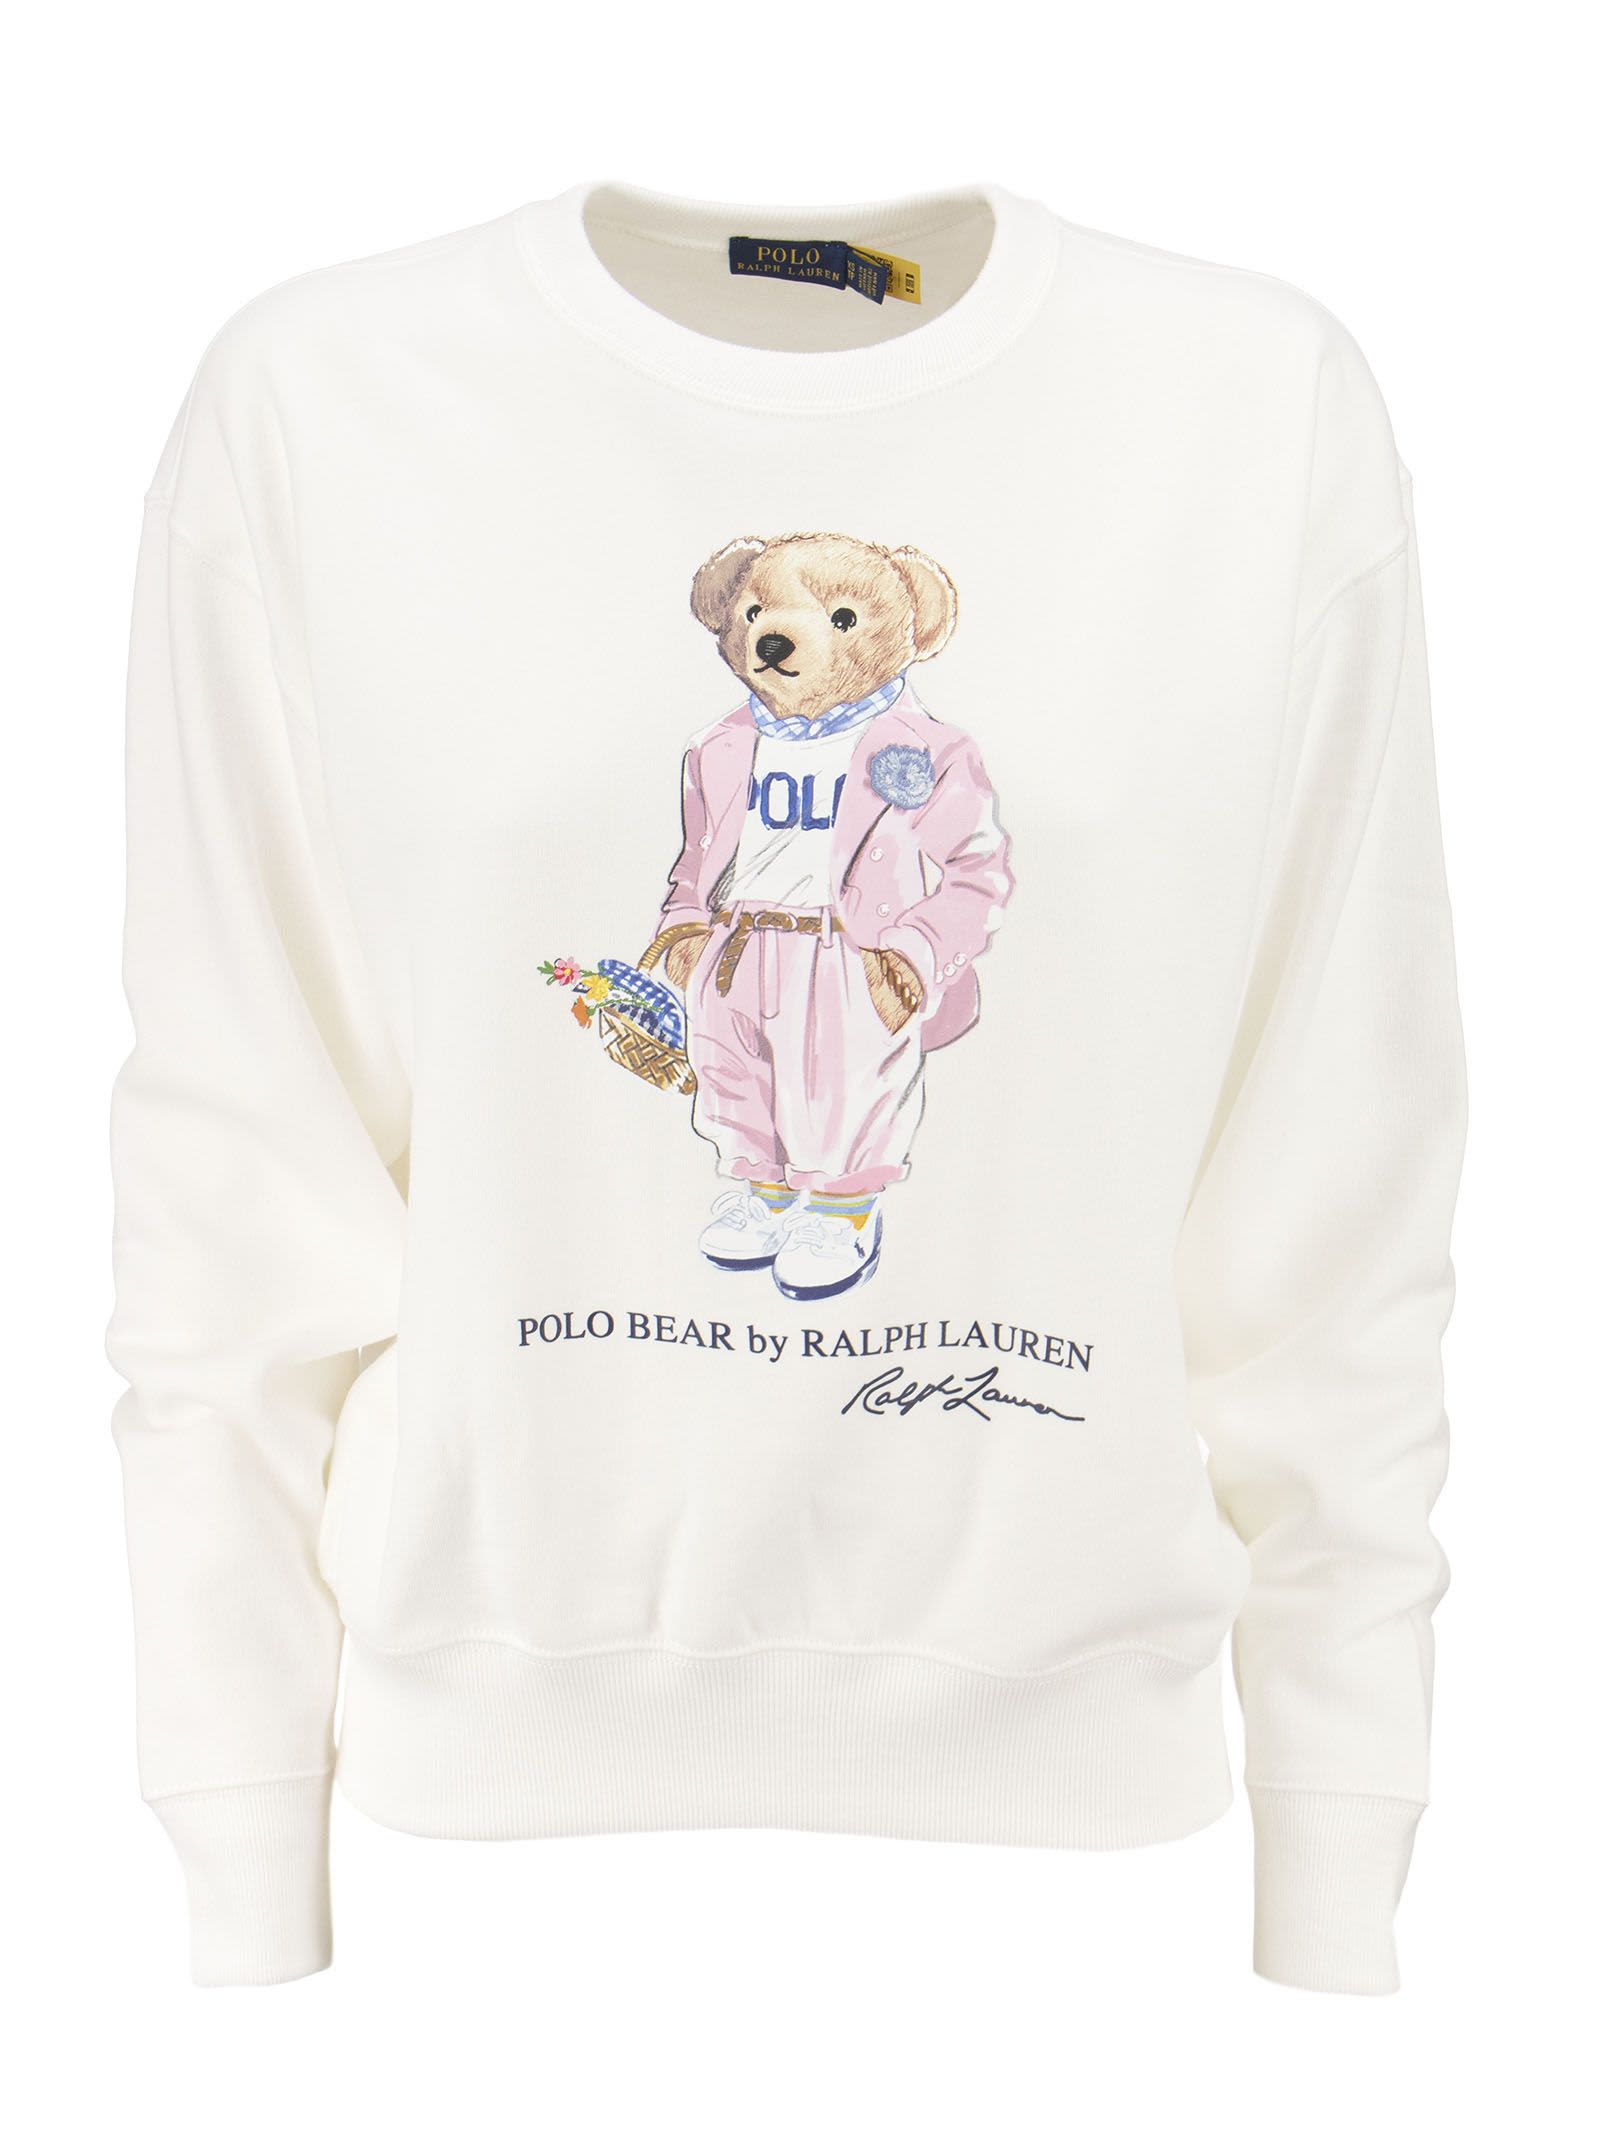 Ralph Lauren Picnic Polo Bear Sweatshirt